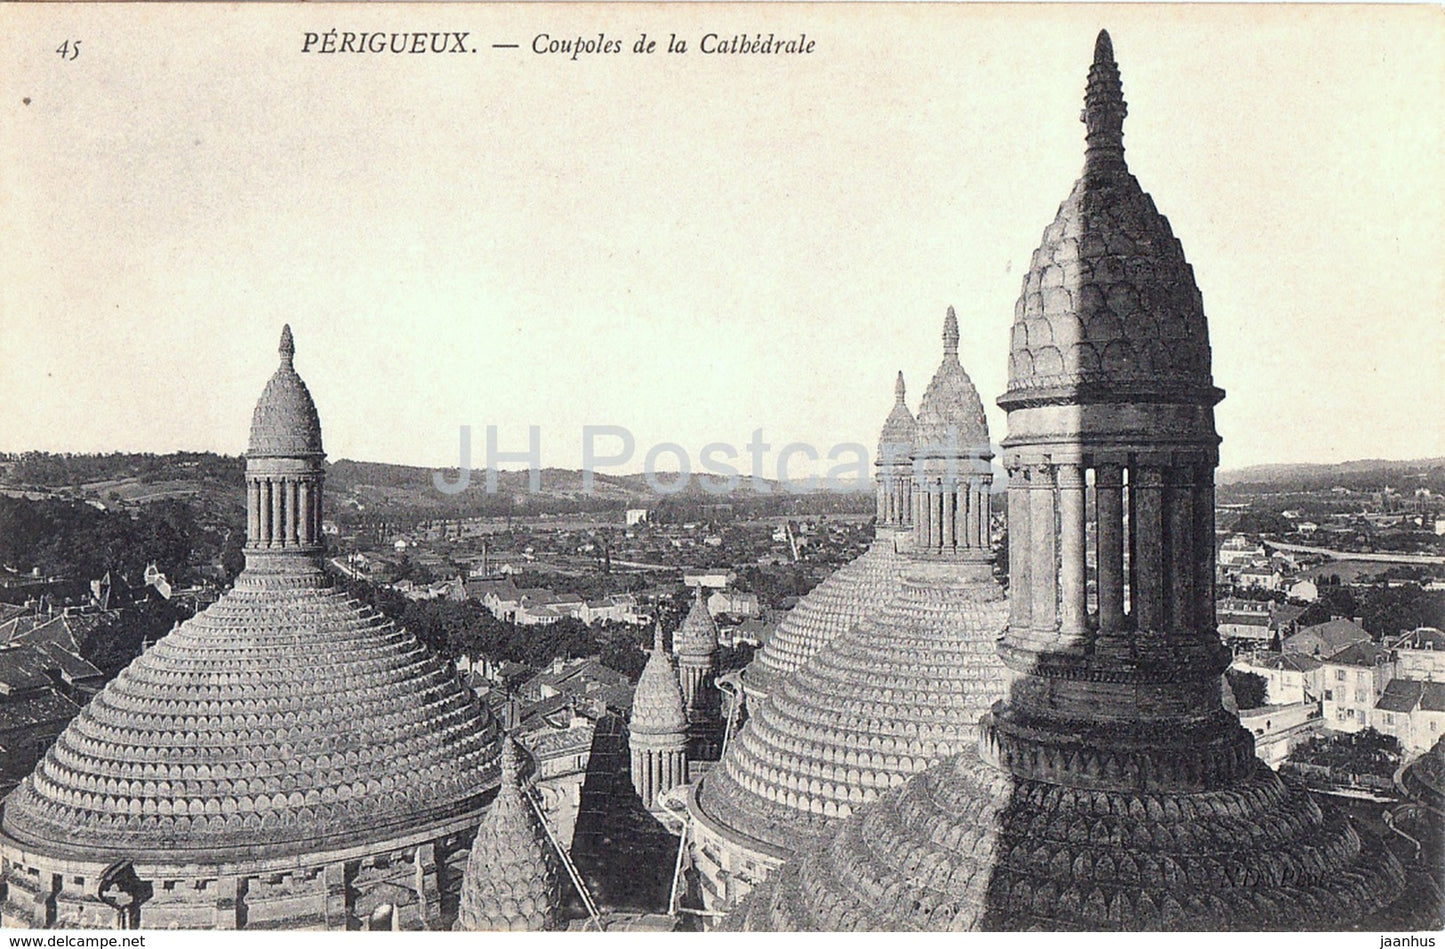 Perigueux - Coupoles de la Cathedrale - cathedral - 45 - old postcard - France - unused - JH Postcards